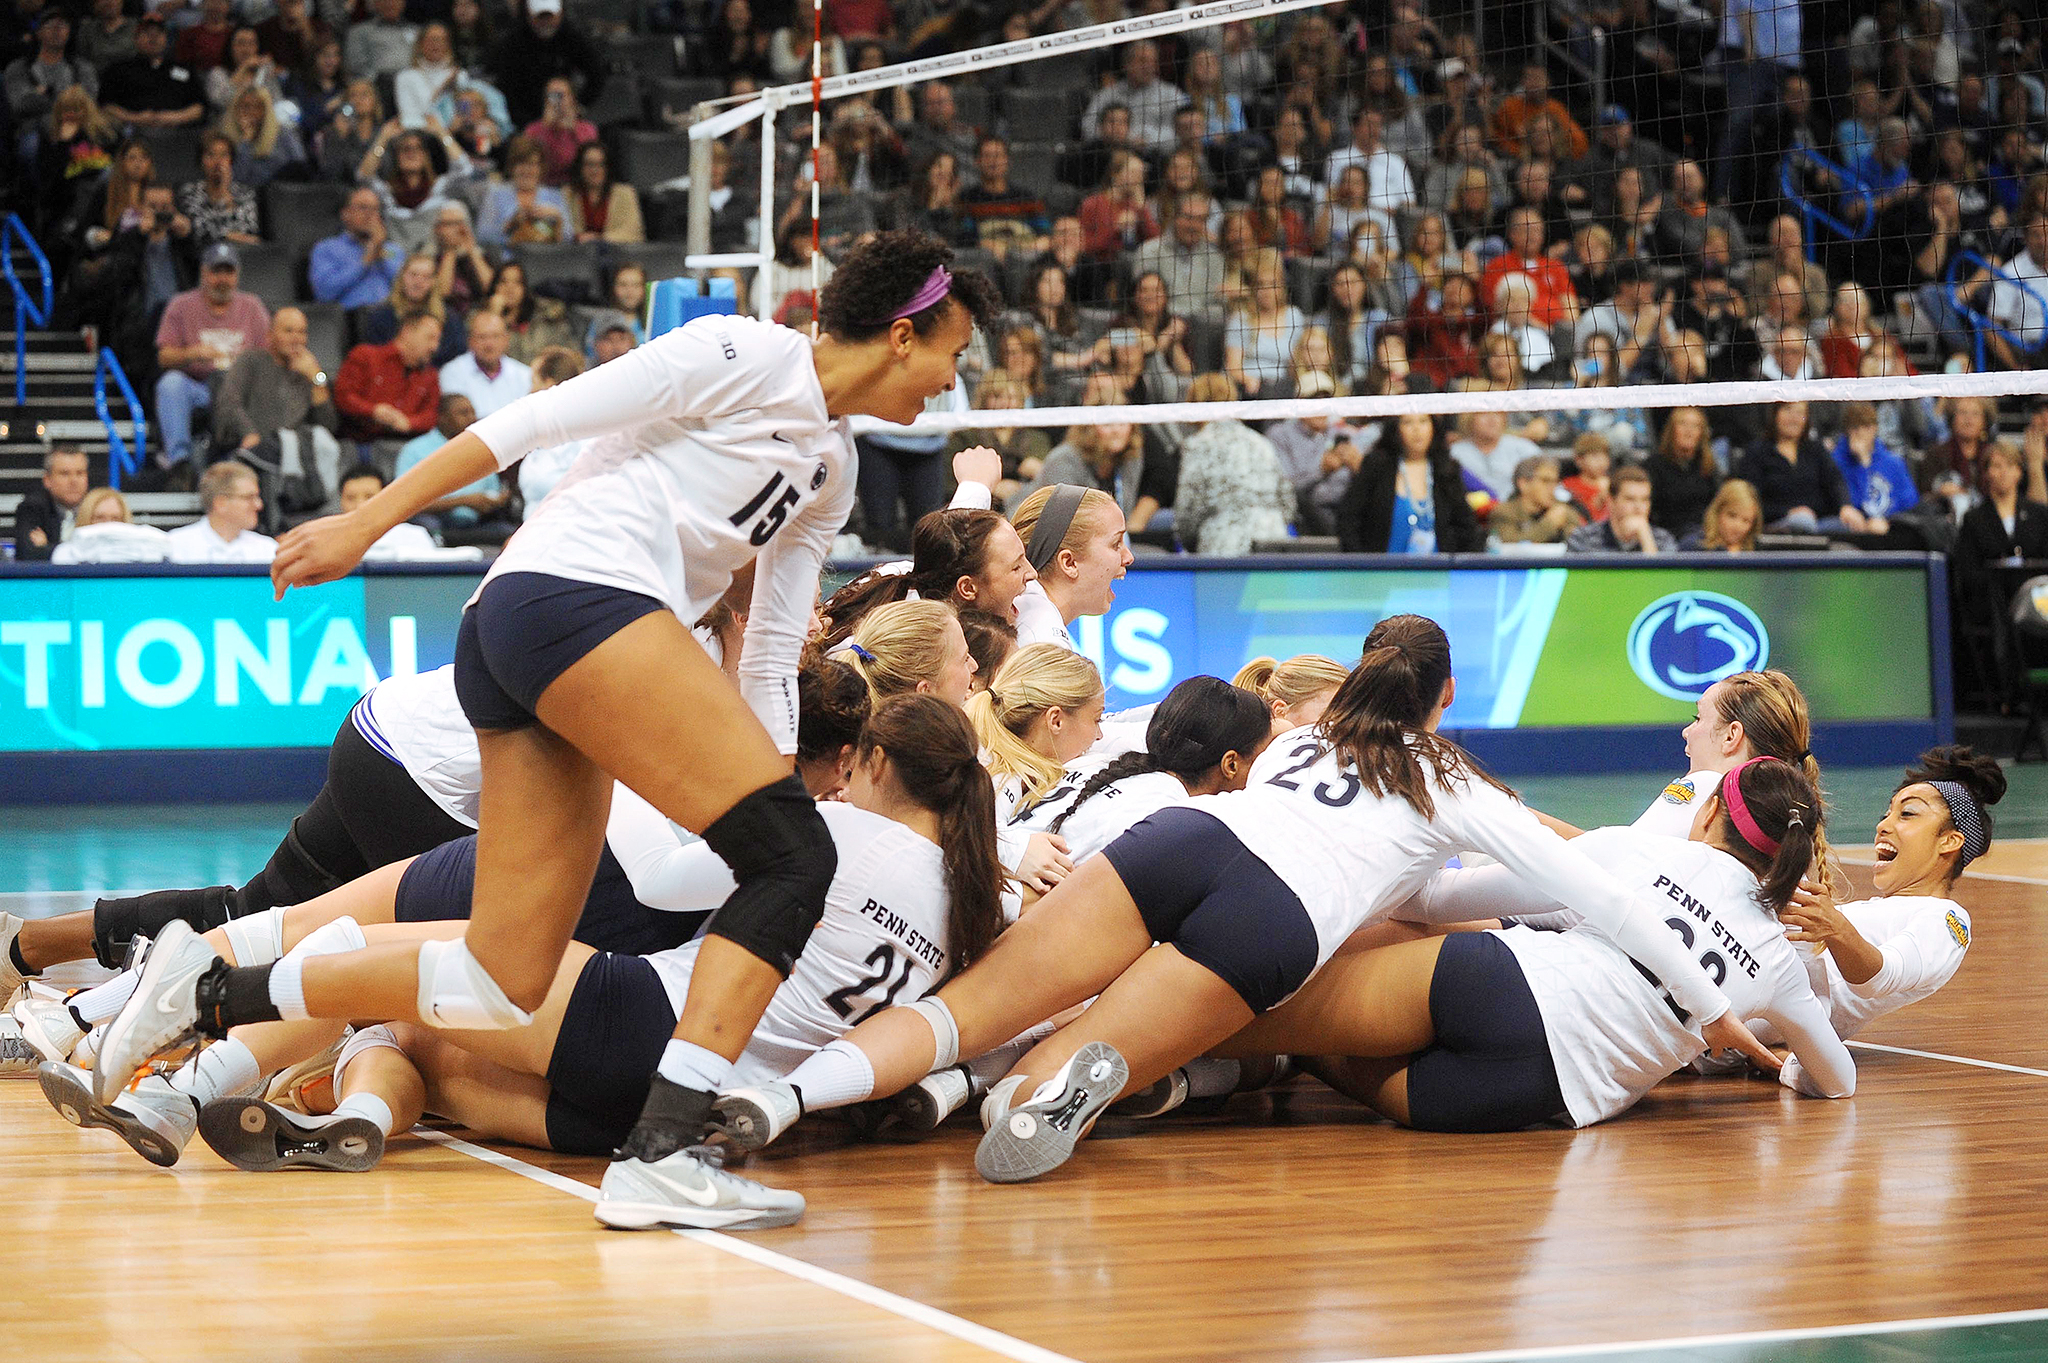 NCAA Volleyball Final Penn State Celebrates 2014 NCAA Women's